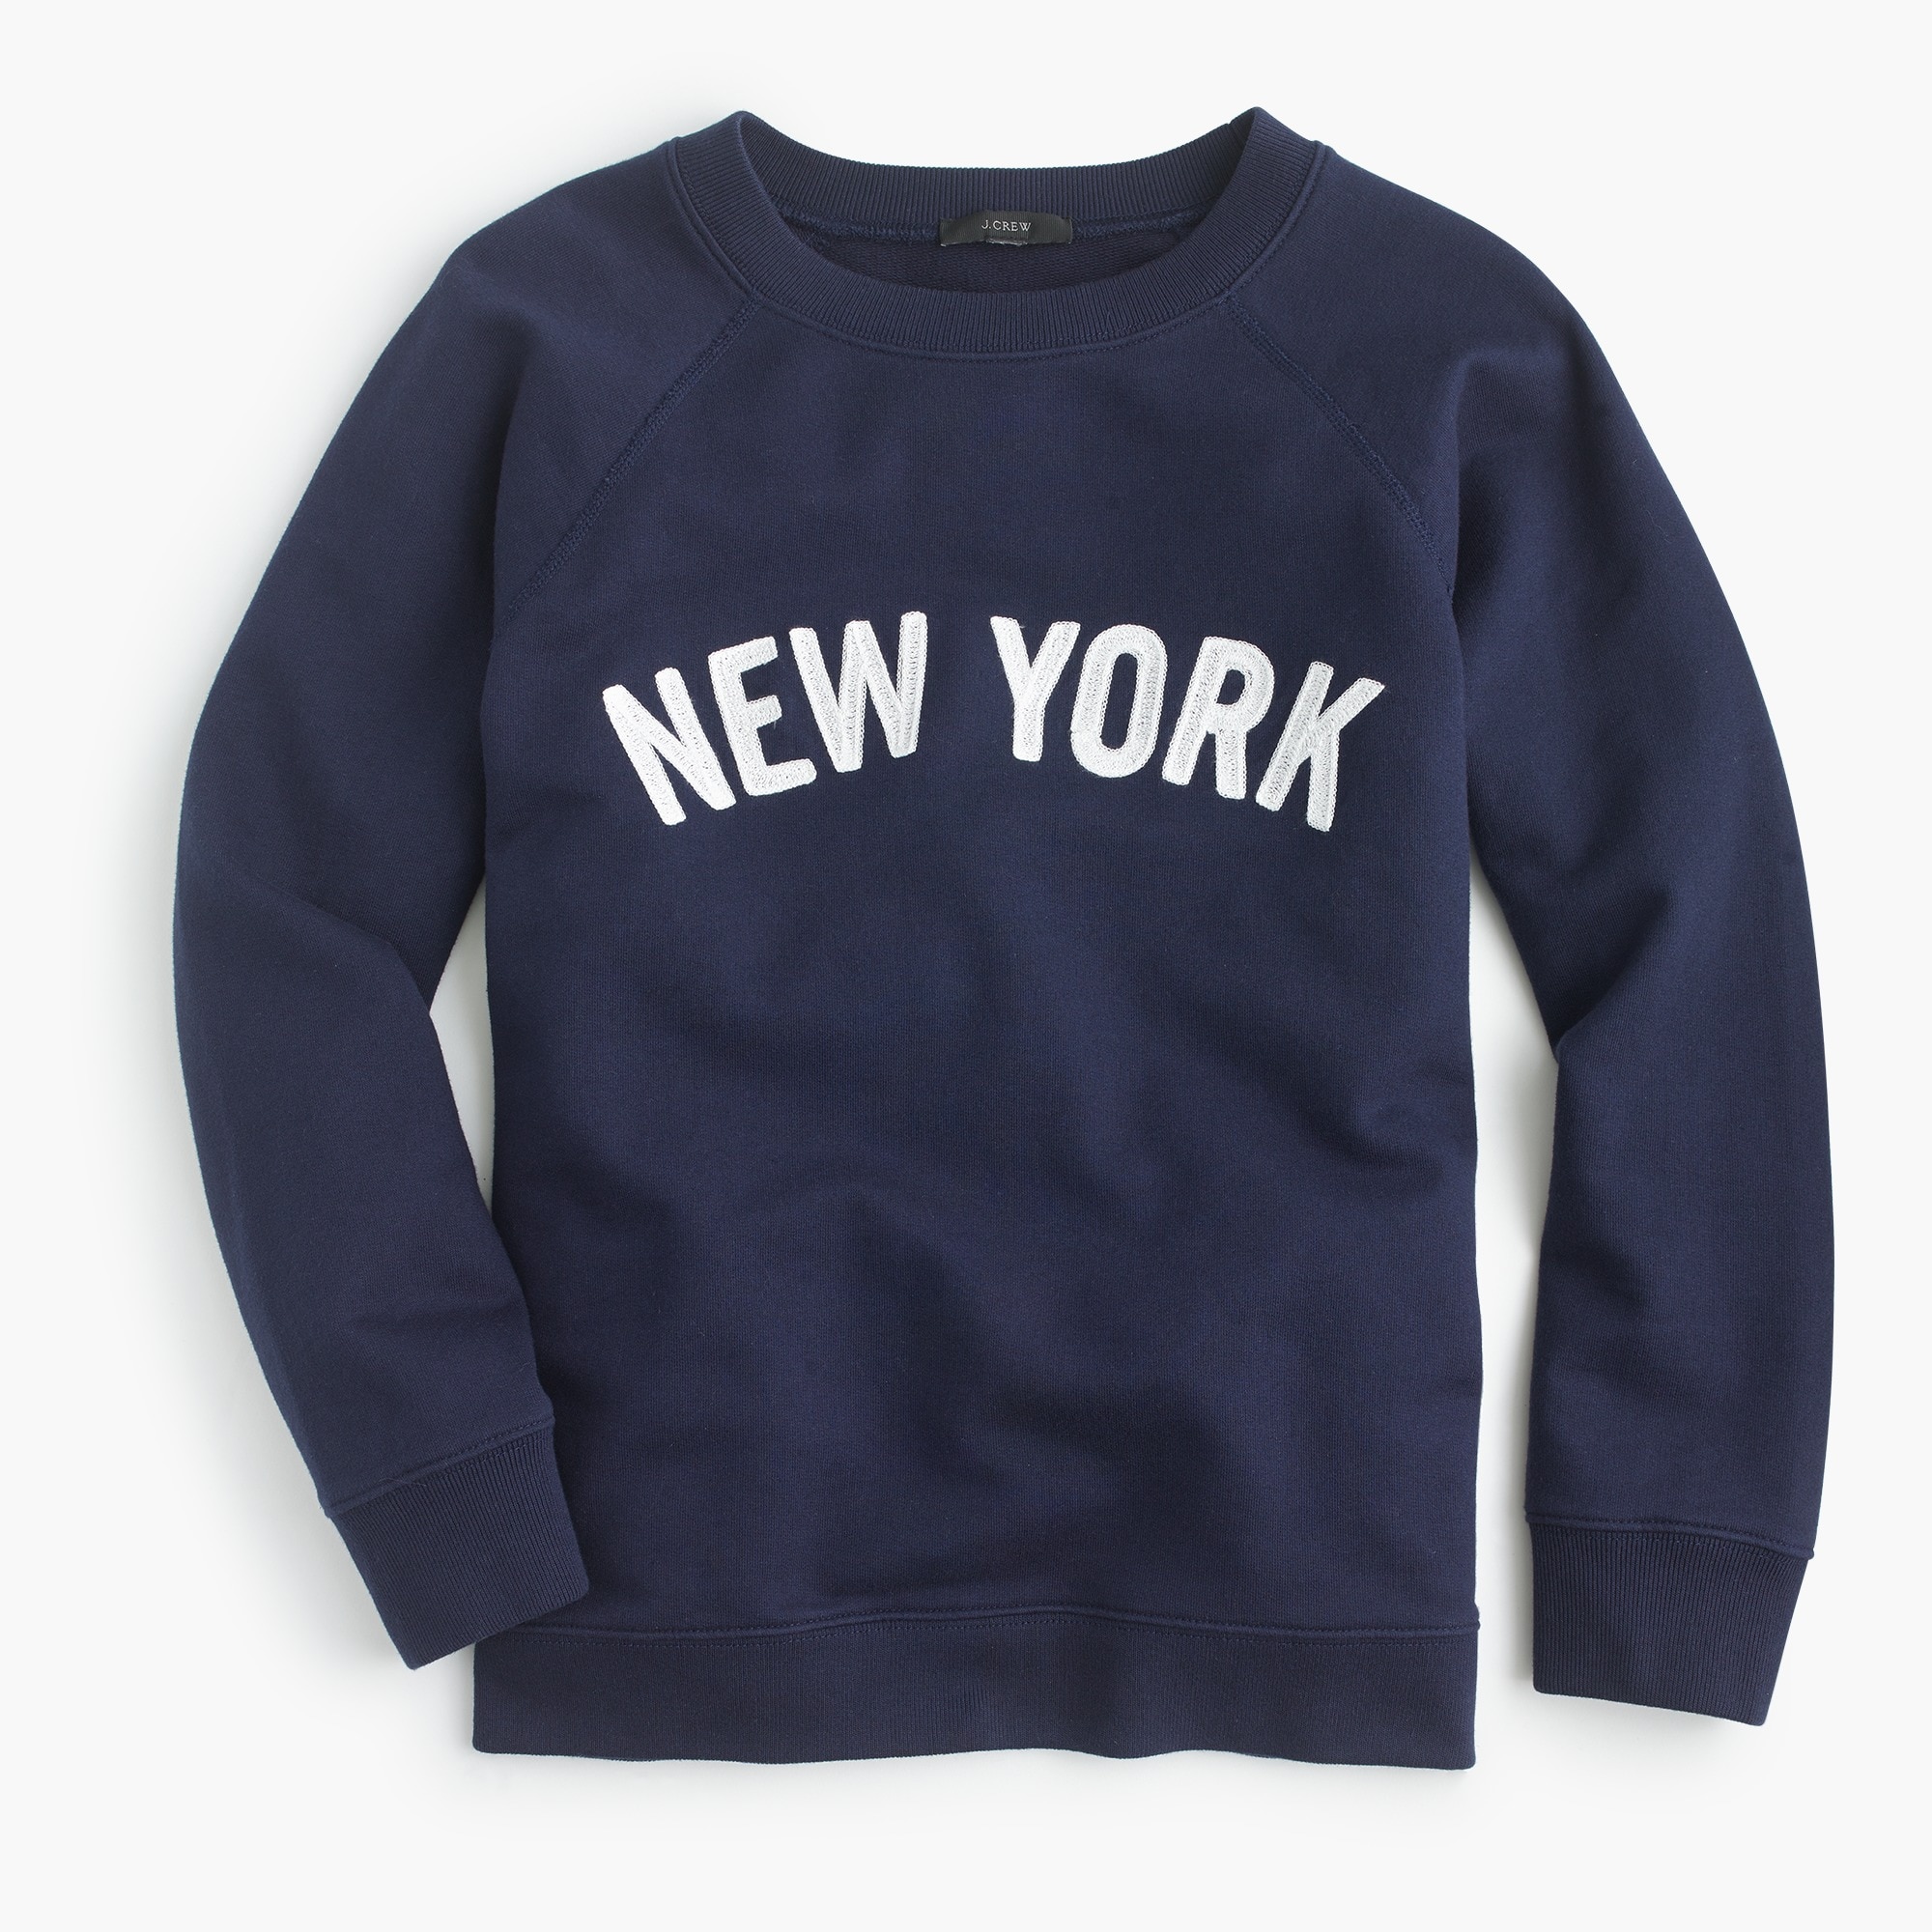 J.Crew: New York Sweatshirt For Women